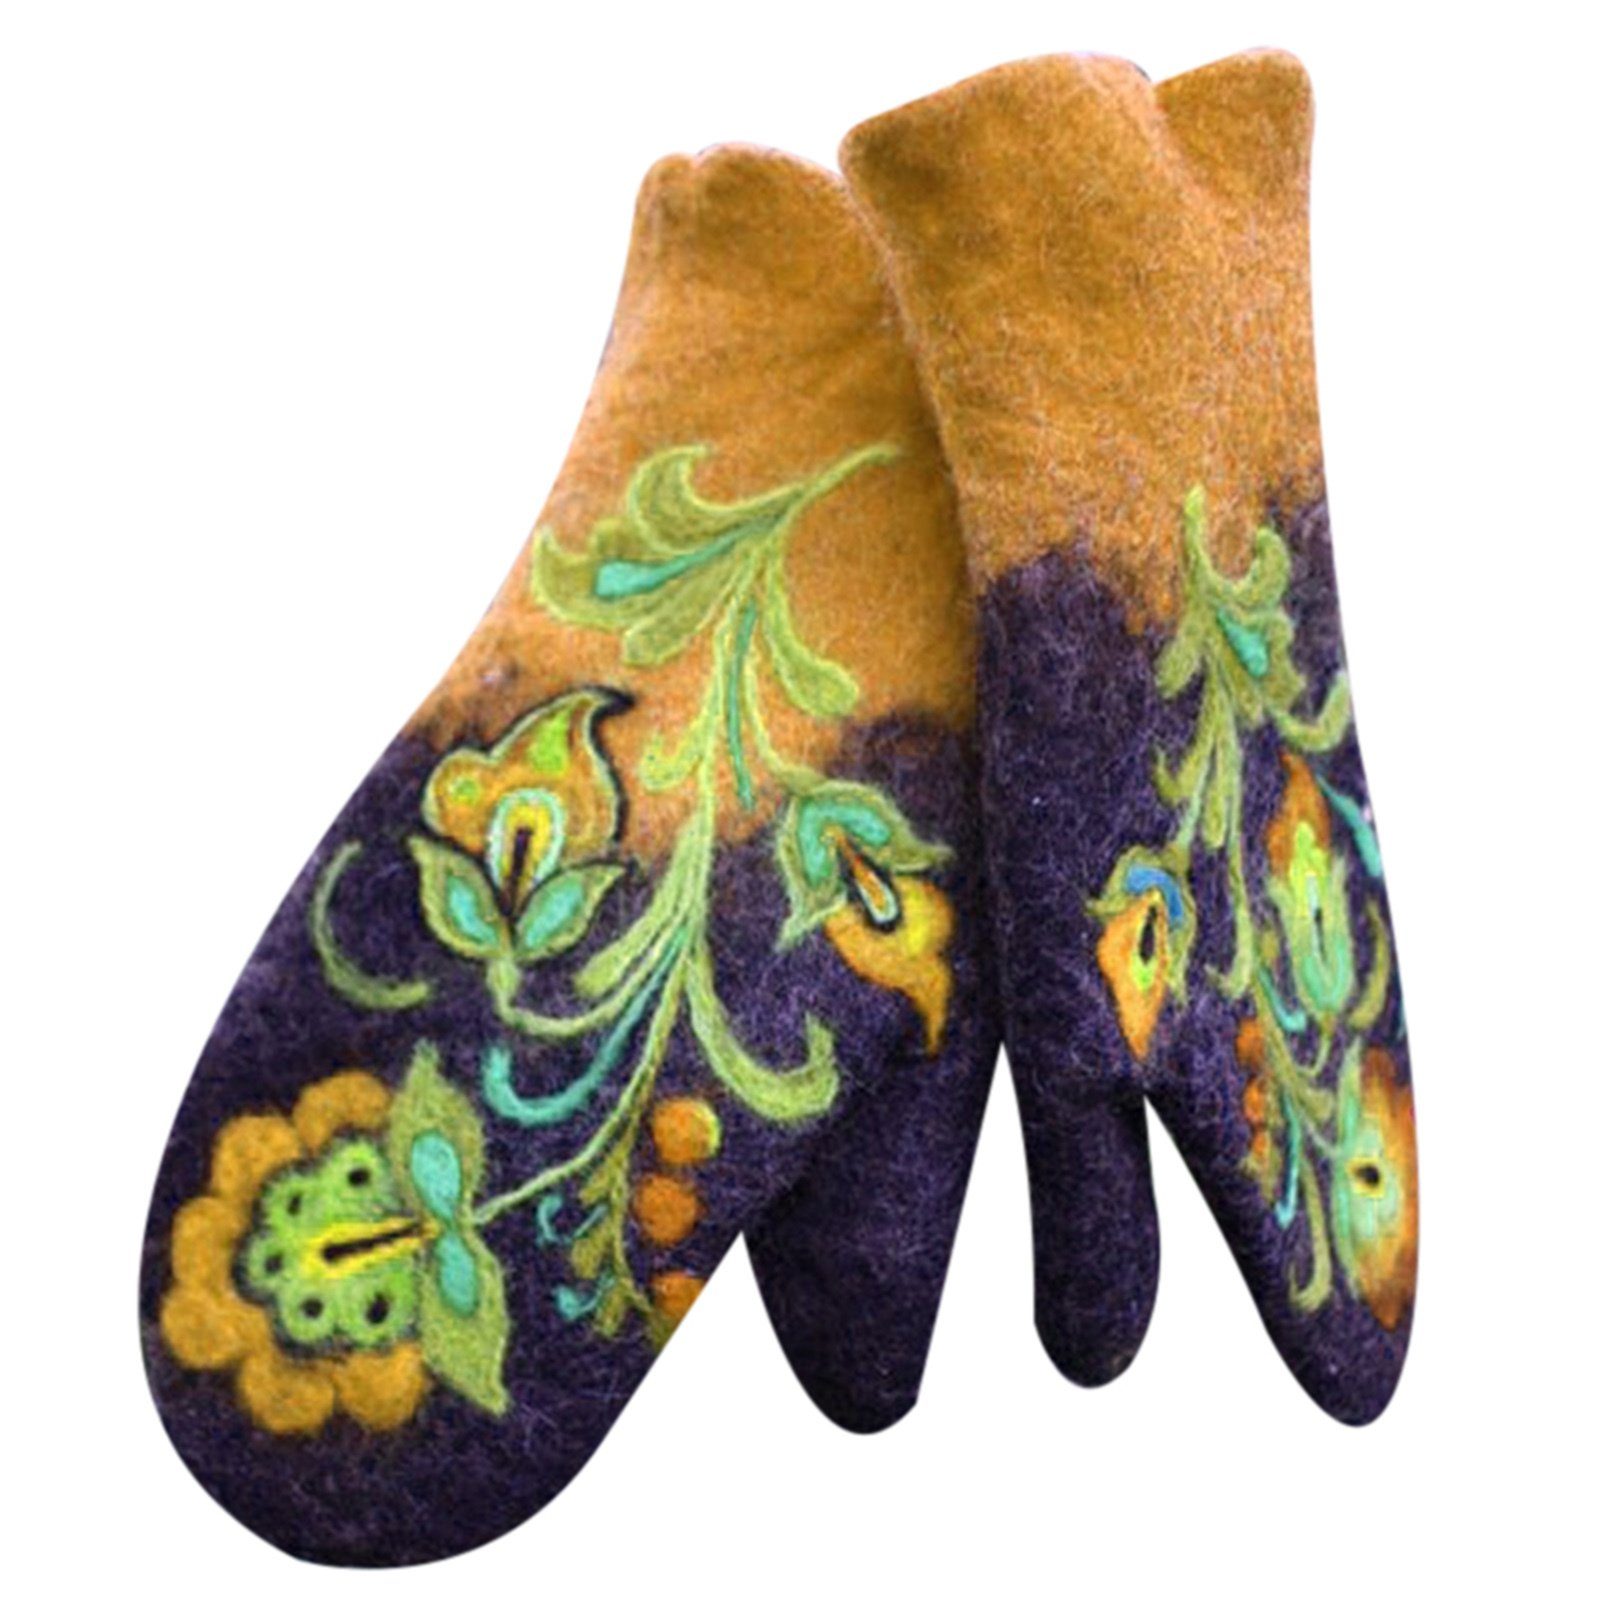 Blusmart Fleecehandschuhe Weihnachtsgeschenk Damen Winterhandschuhe Damenmode Handschuhe Fleecehandschuhe Gelb